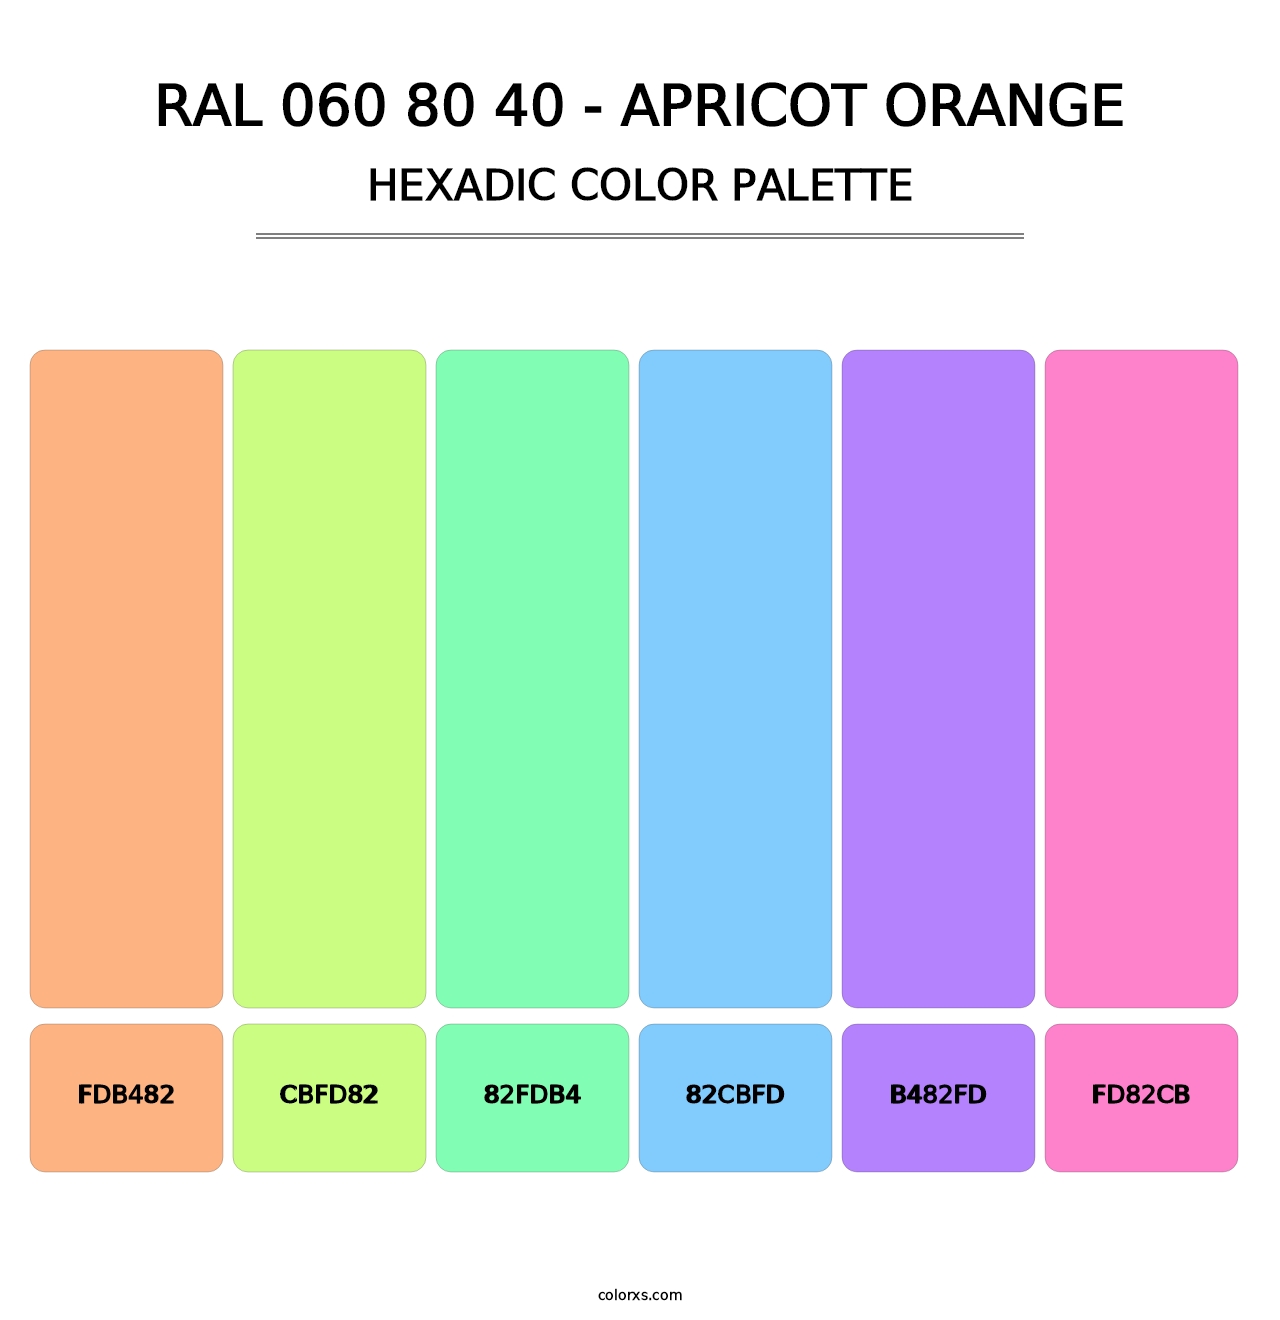 RAL 060 80 40 - Apricot Orange - Hexadic Color Palette